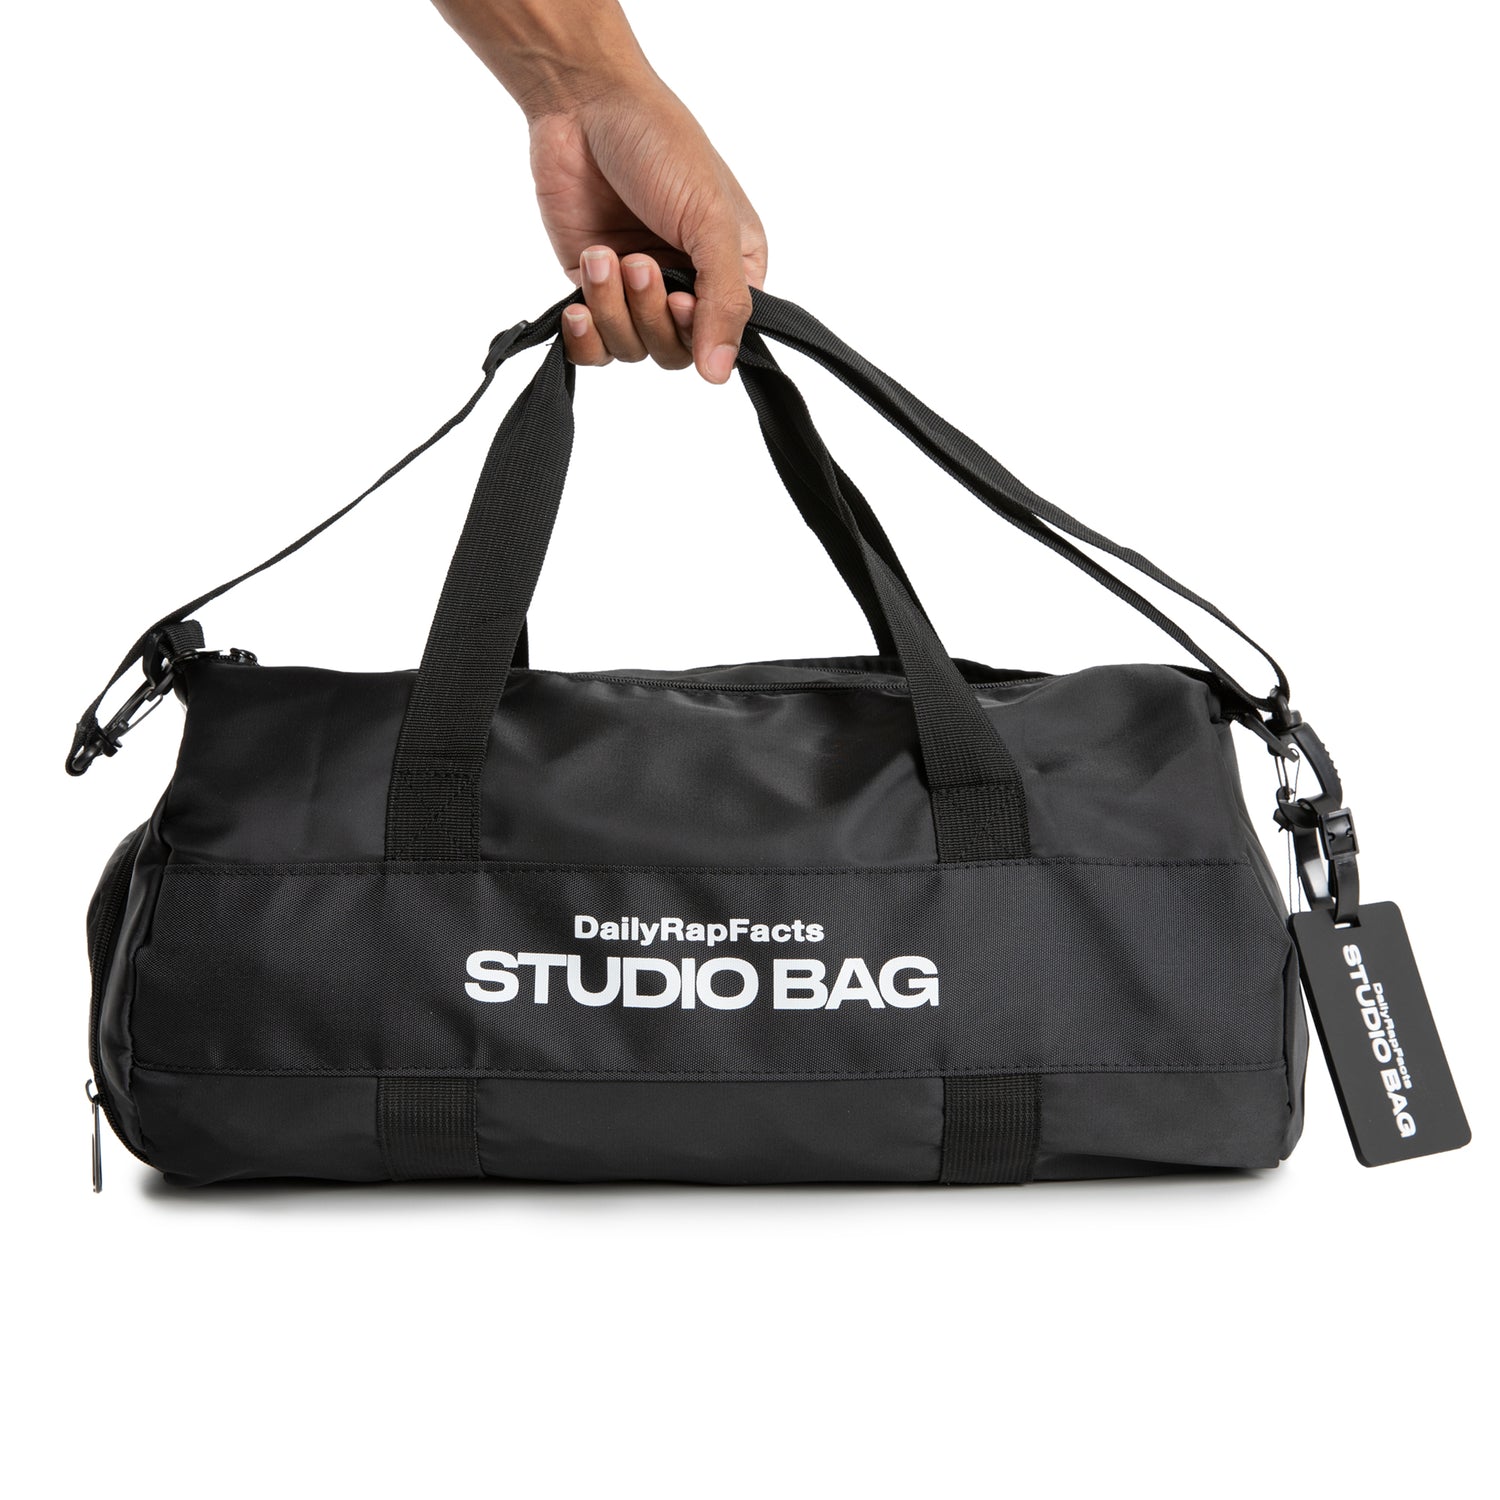 Holding a Black Studio Bag